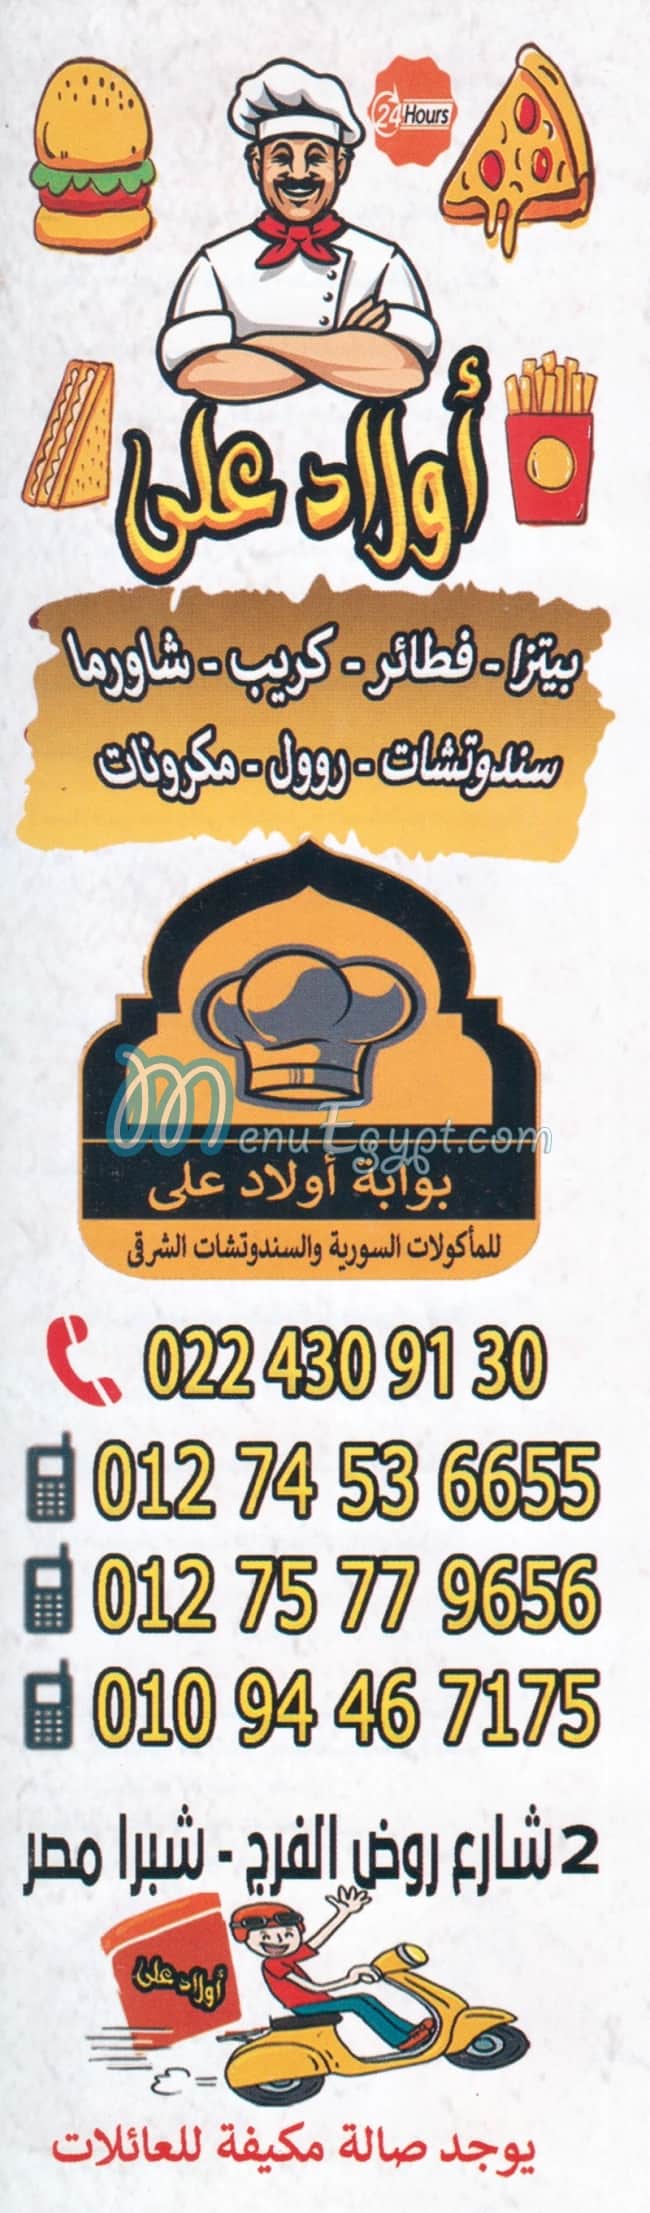 Awlad Ali menu Egypt